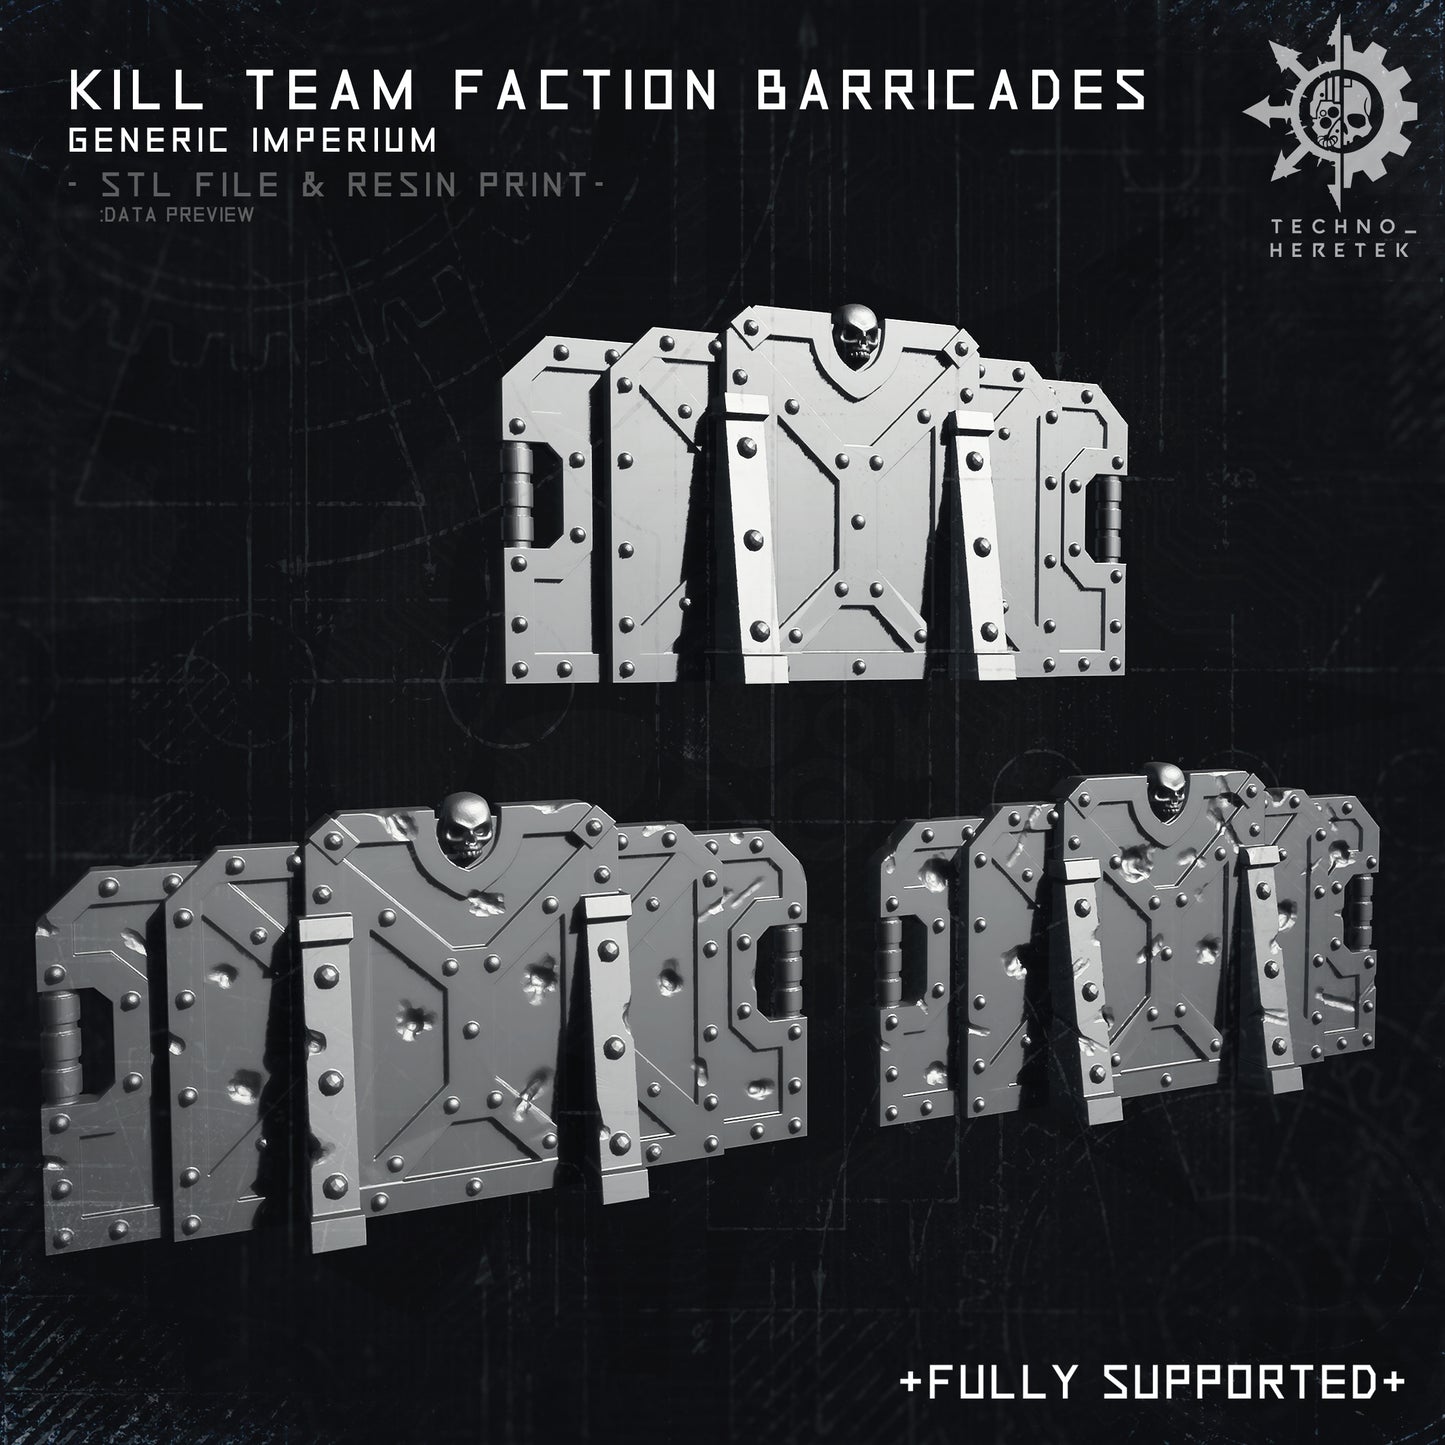 Imperium Faction Barricades for Kill Team